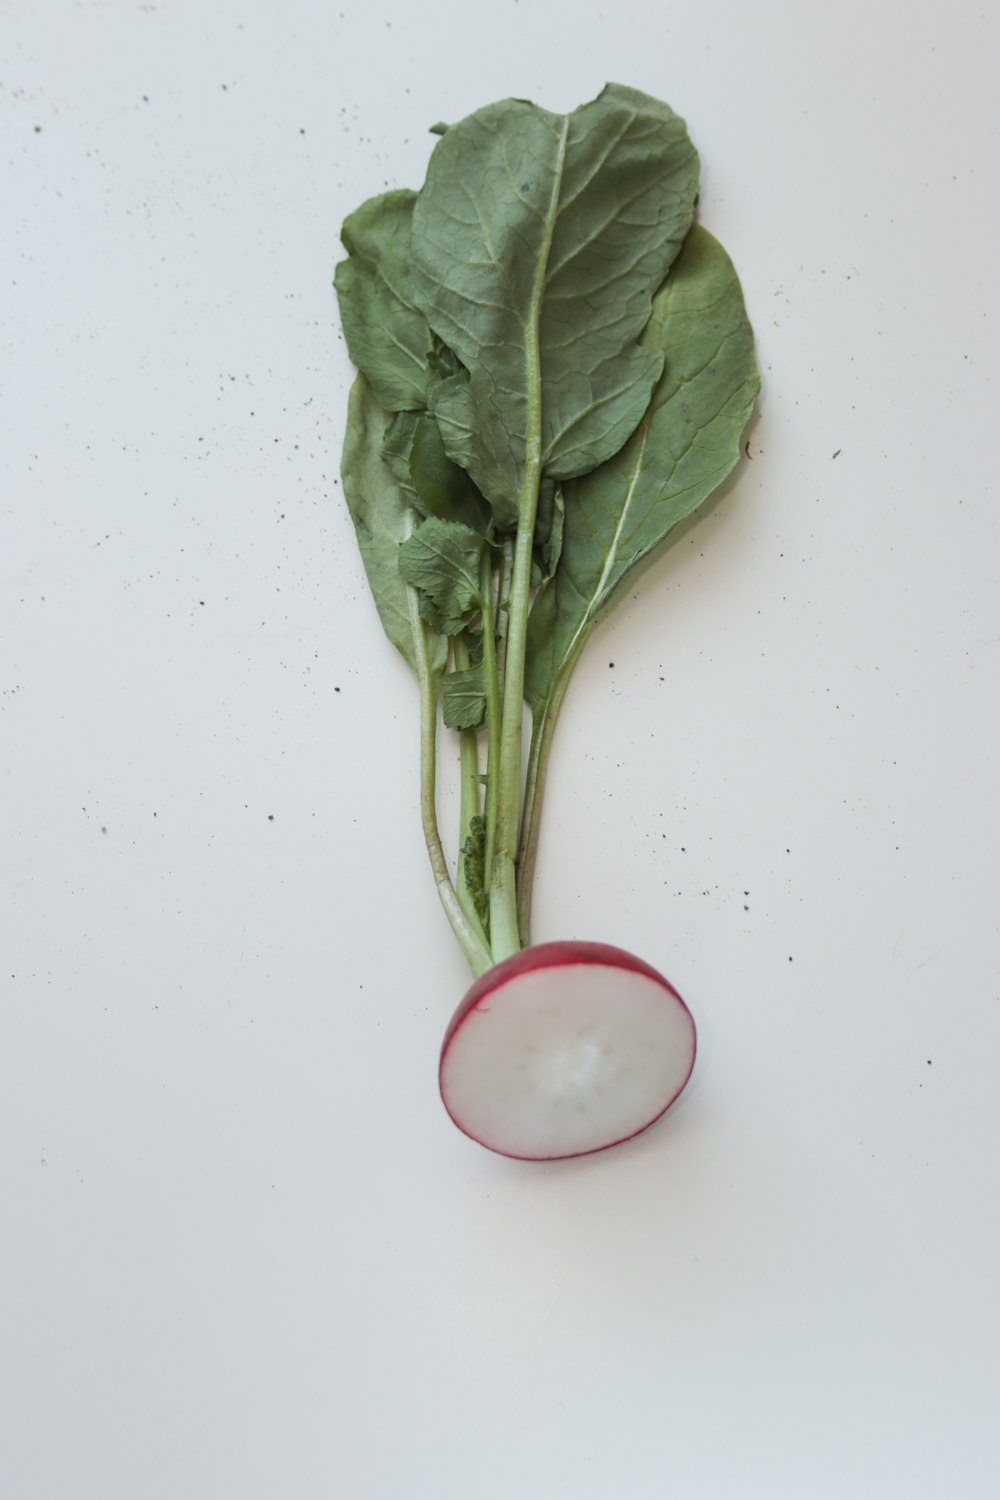 green vegetable on white table